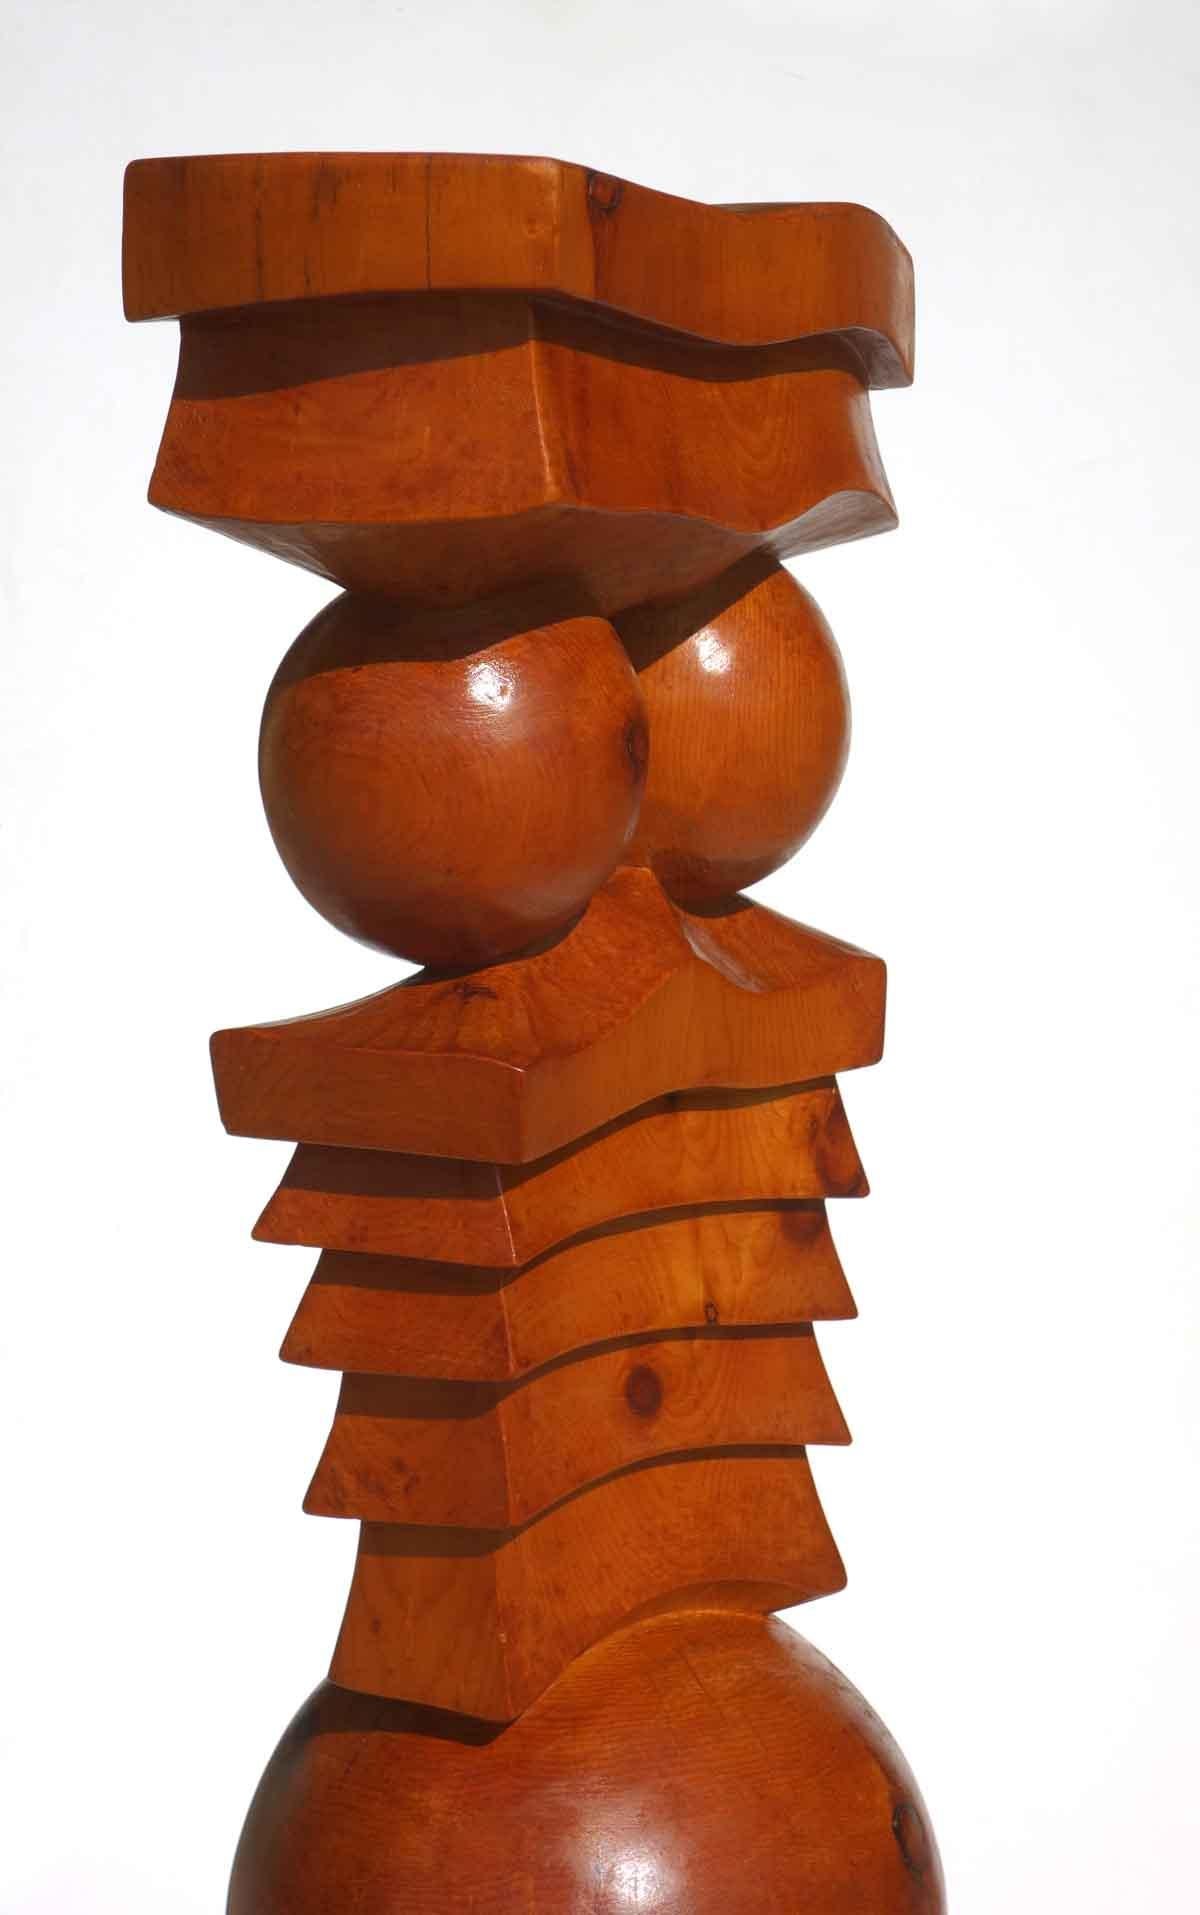 Giampiero Pazzola, Italie, années 1980
Sculpture en bois Bigli.